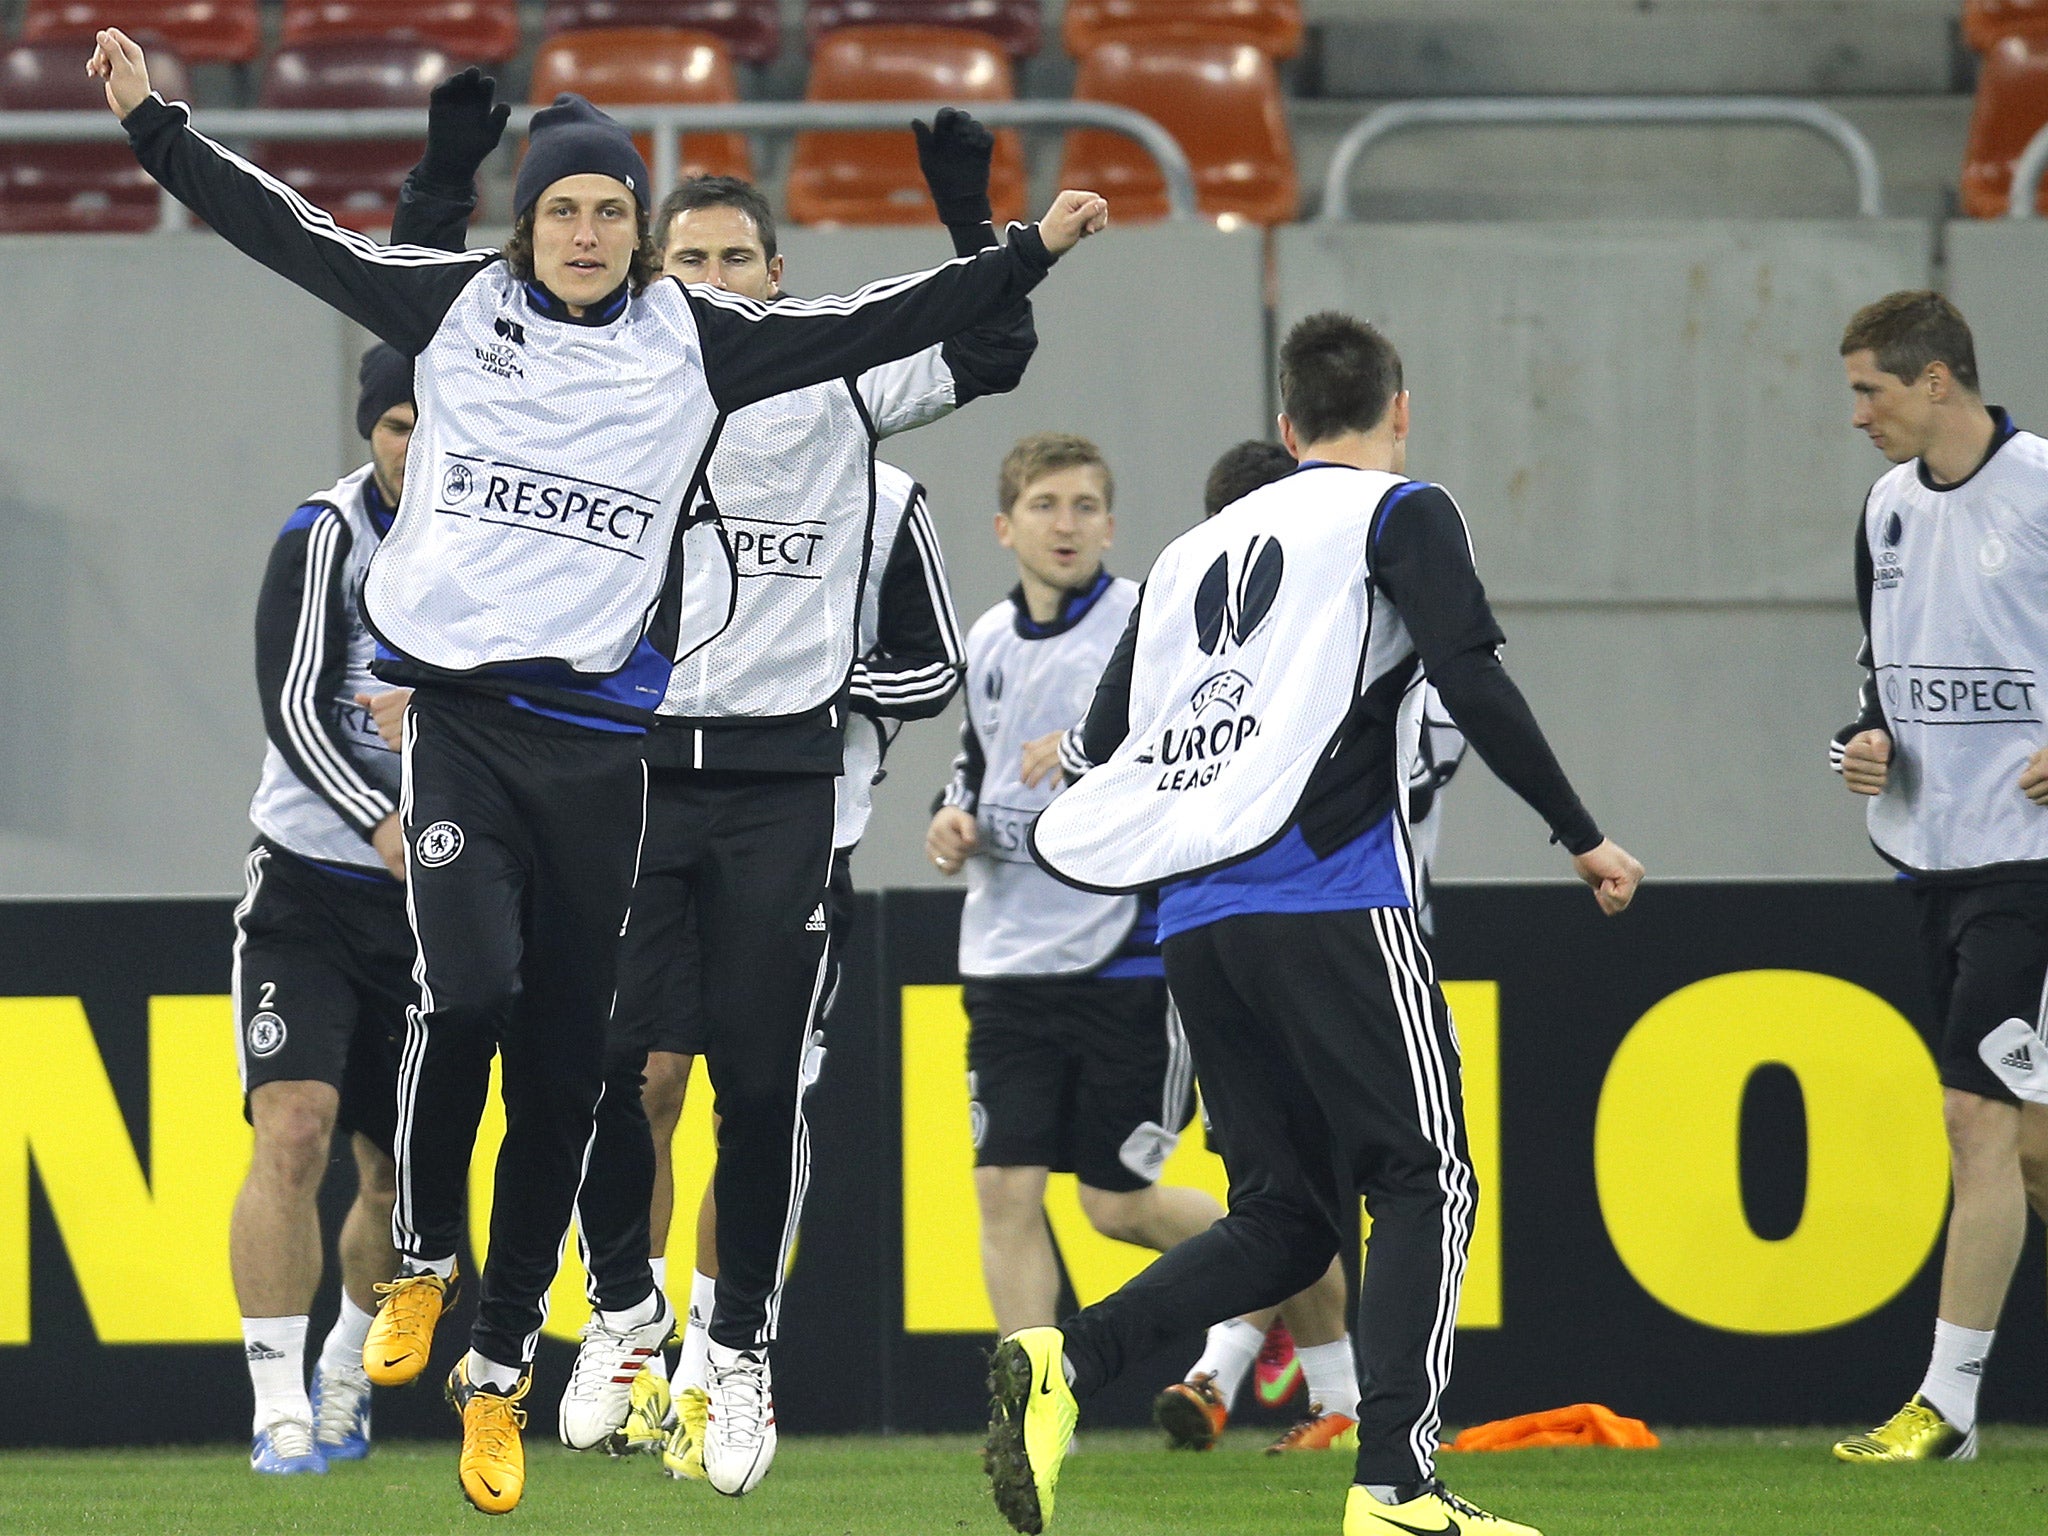 Chelsea’s David Luiz trains ahead of tonight’s game in Bucharest